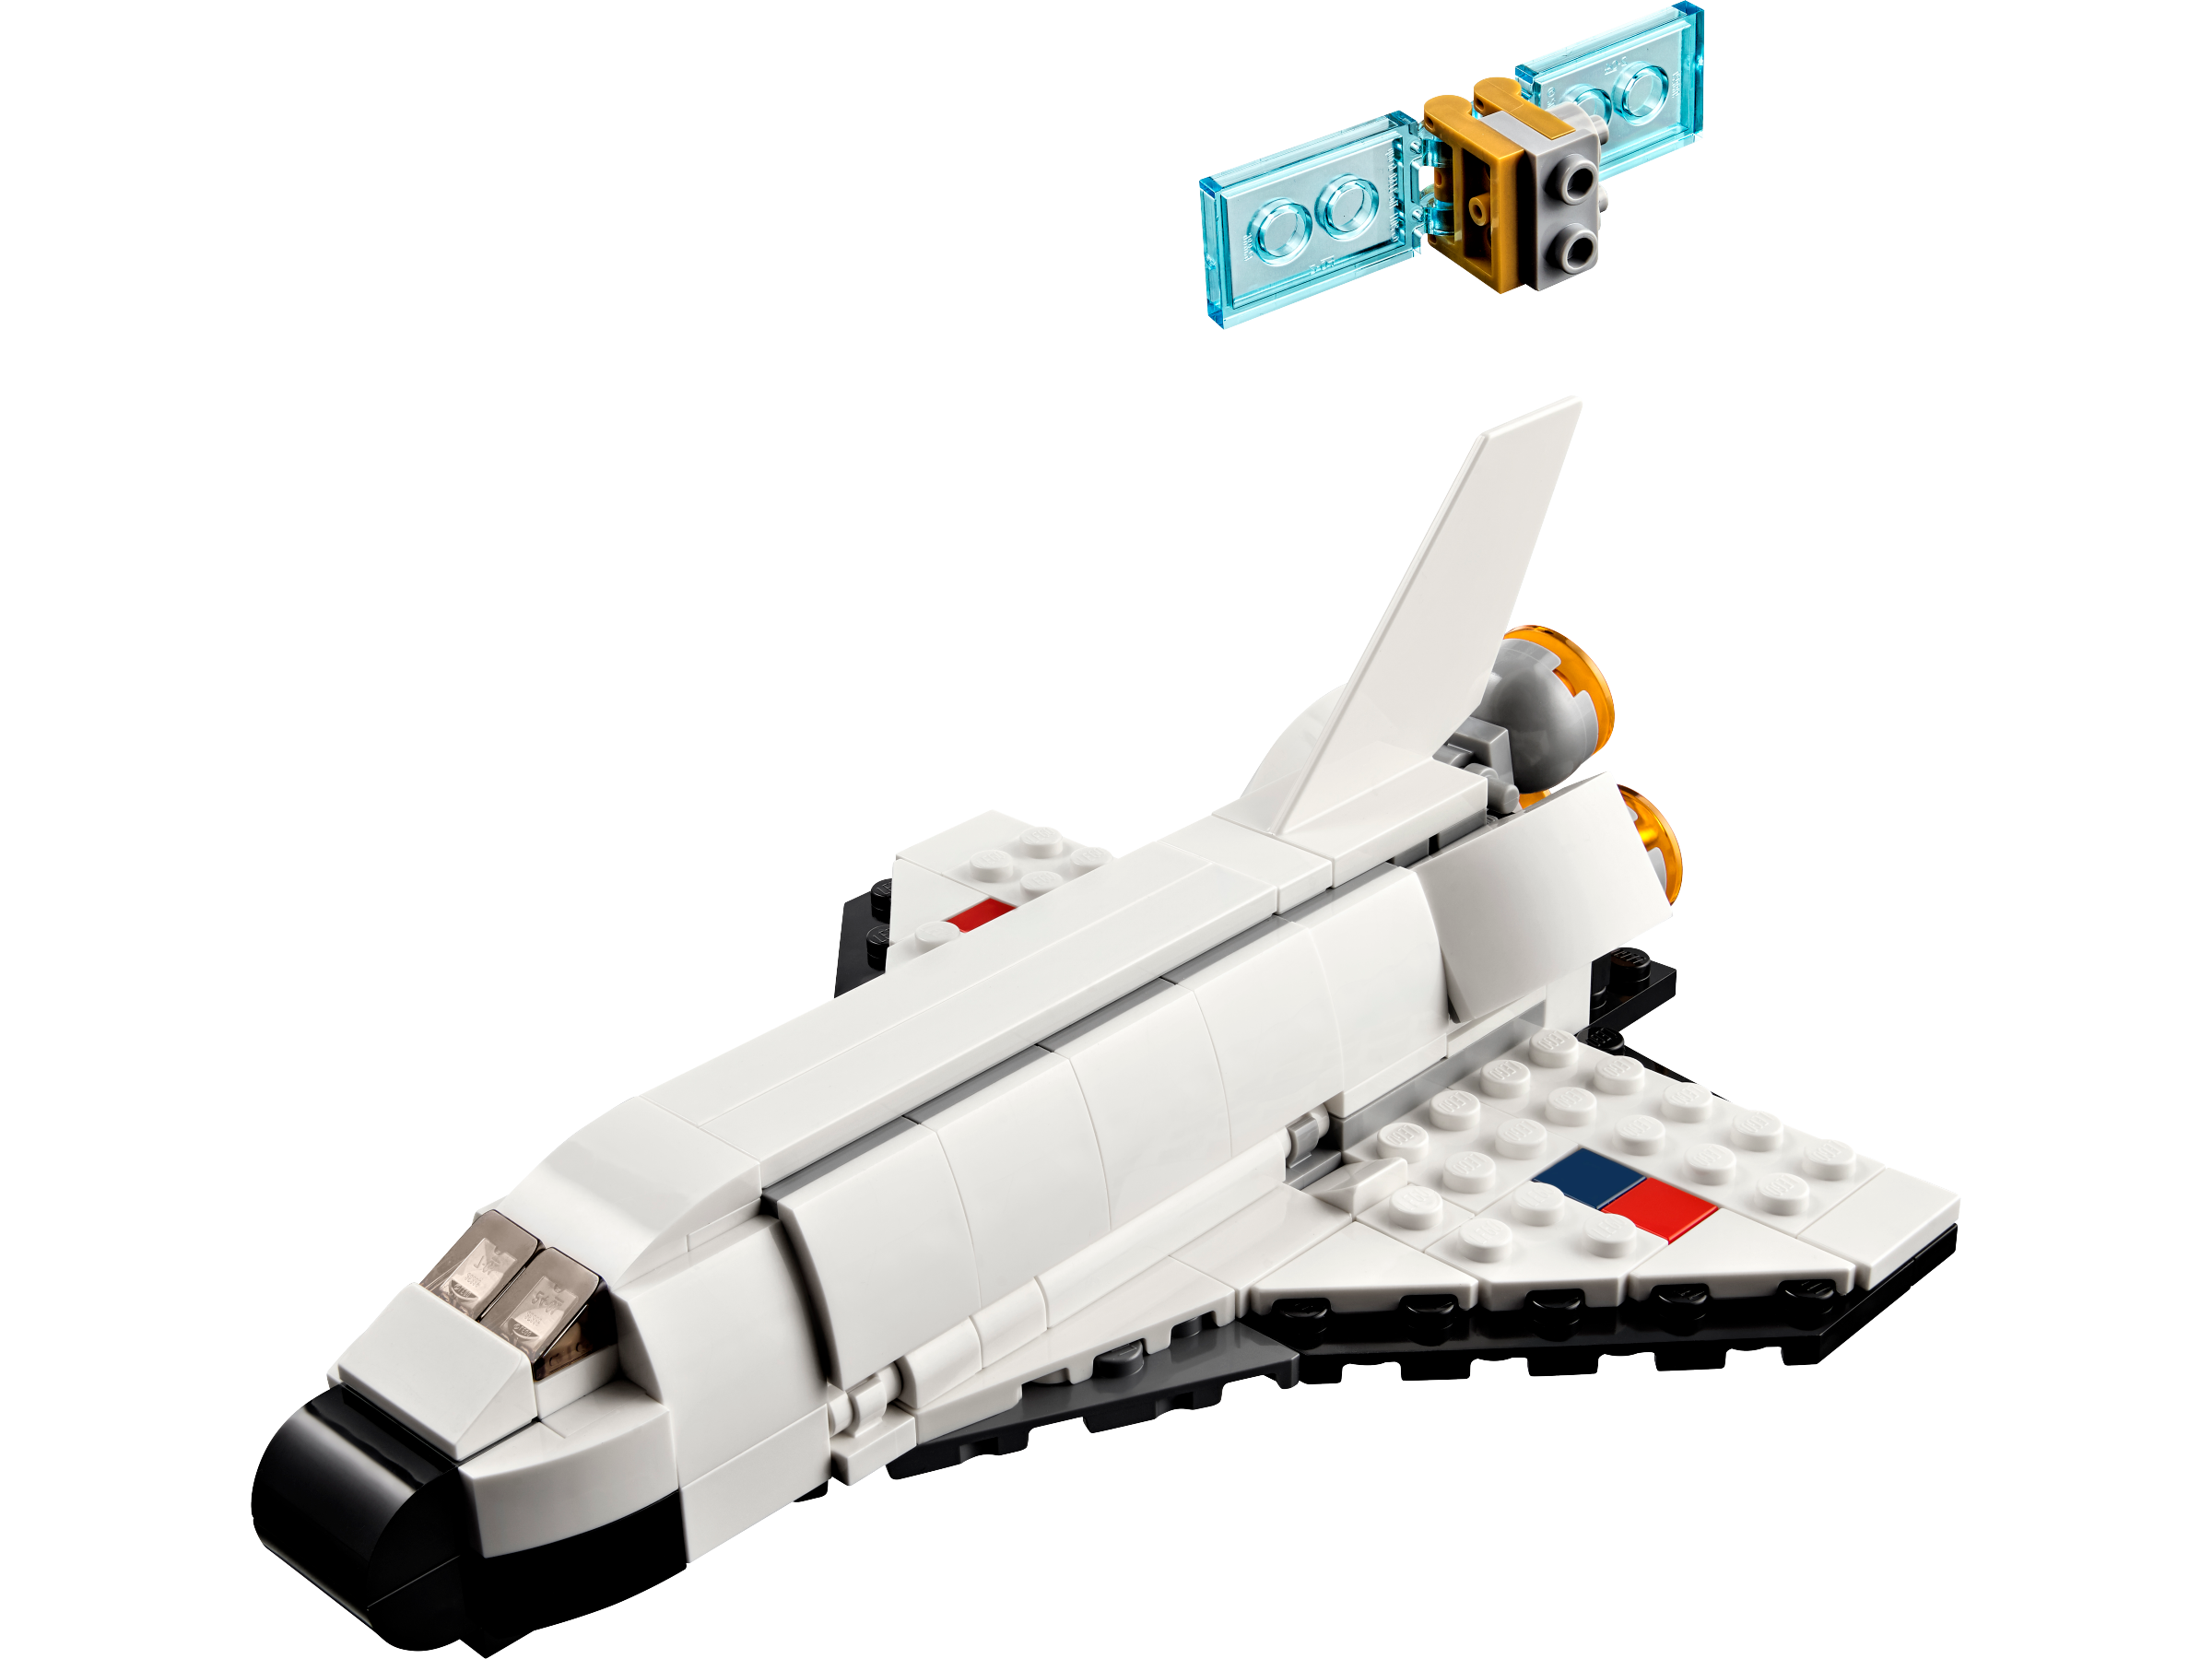 Lego 31134 Space Shuttle